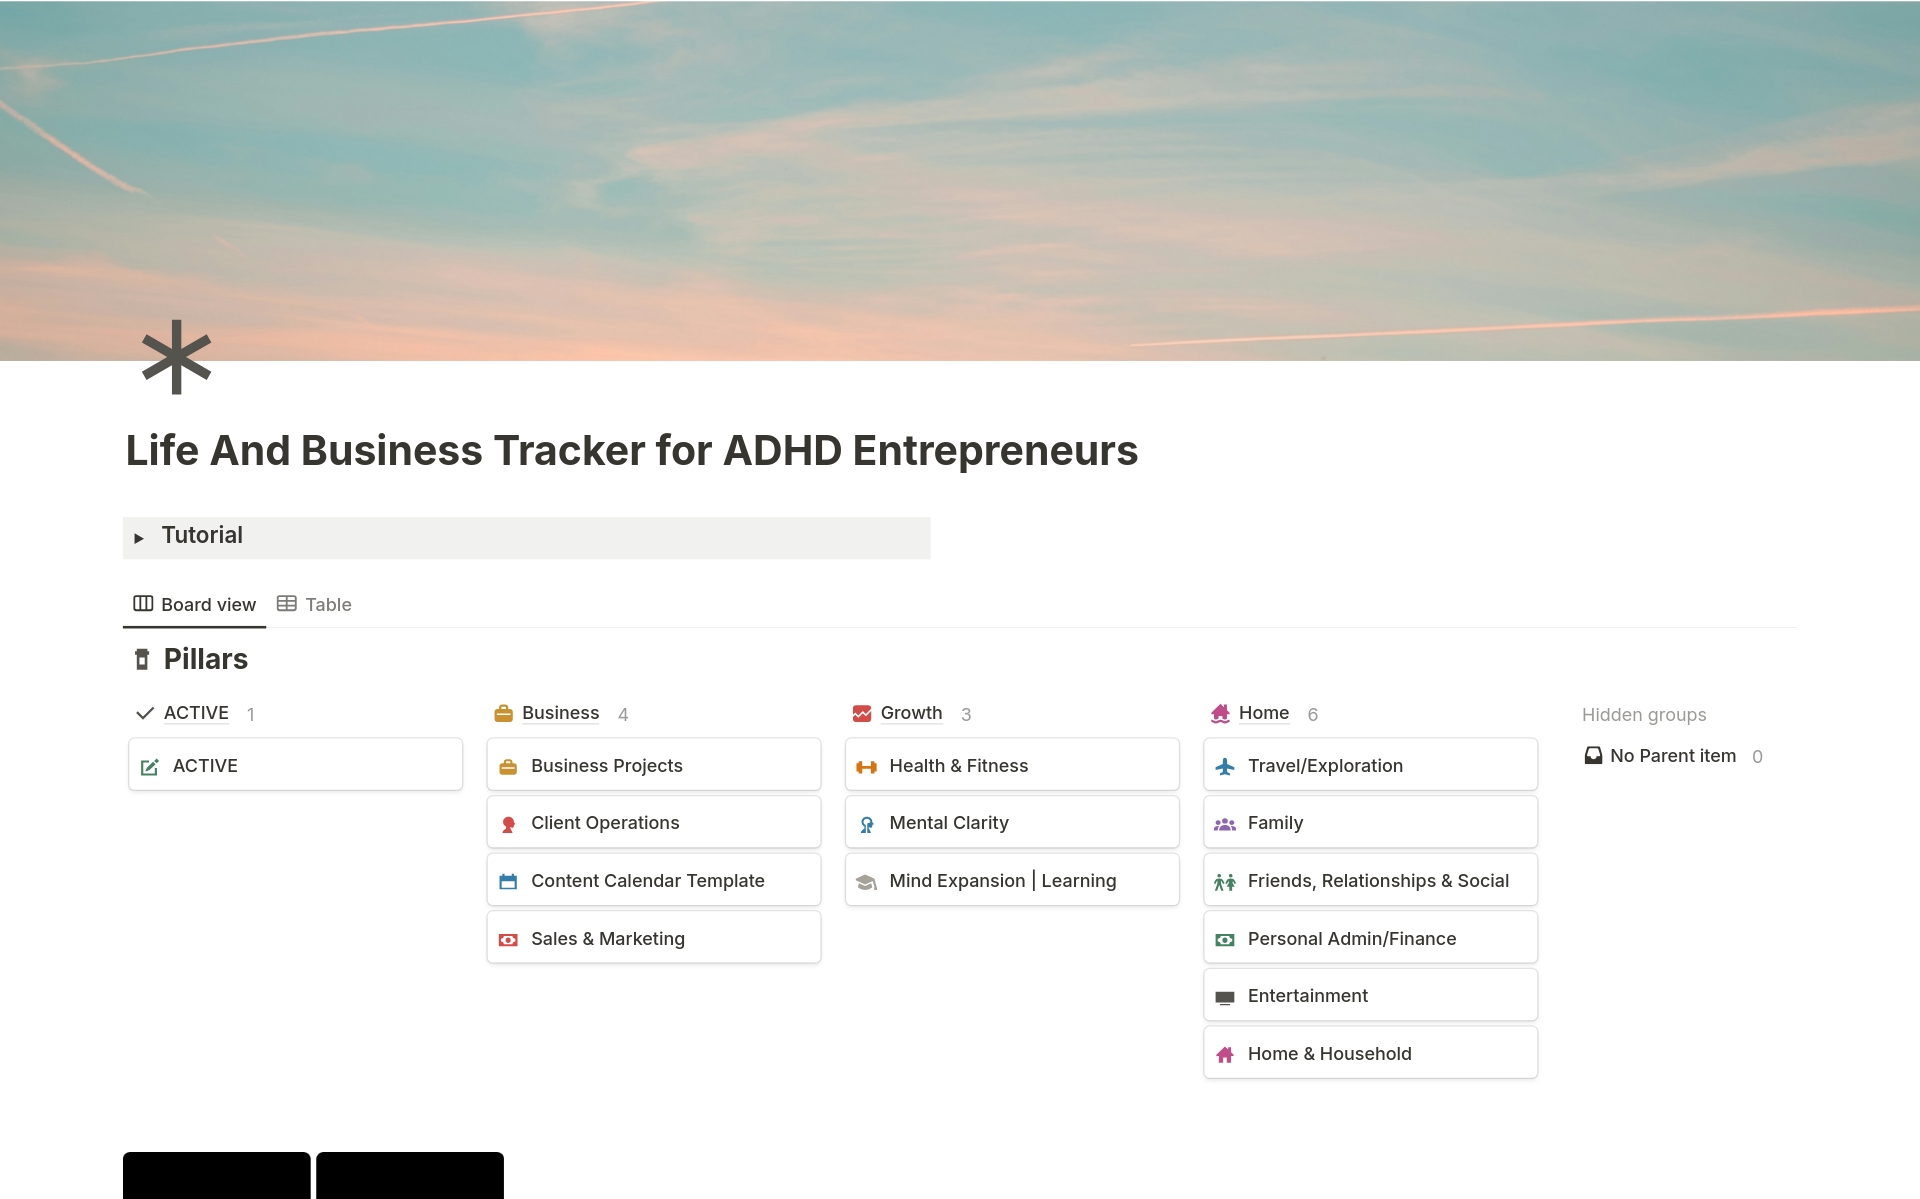 Vista previa de una plantilla para Life & Business Tracker for ADHD Entrepreneurs